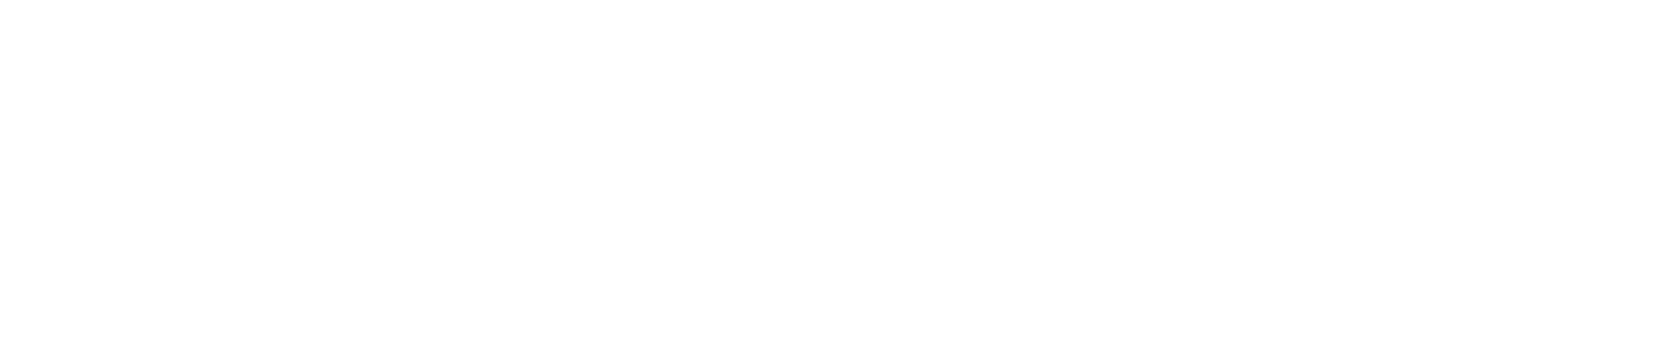 google-data-studio.png